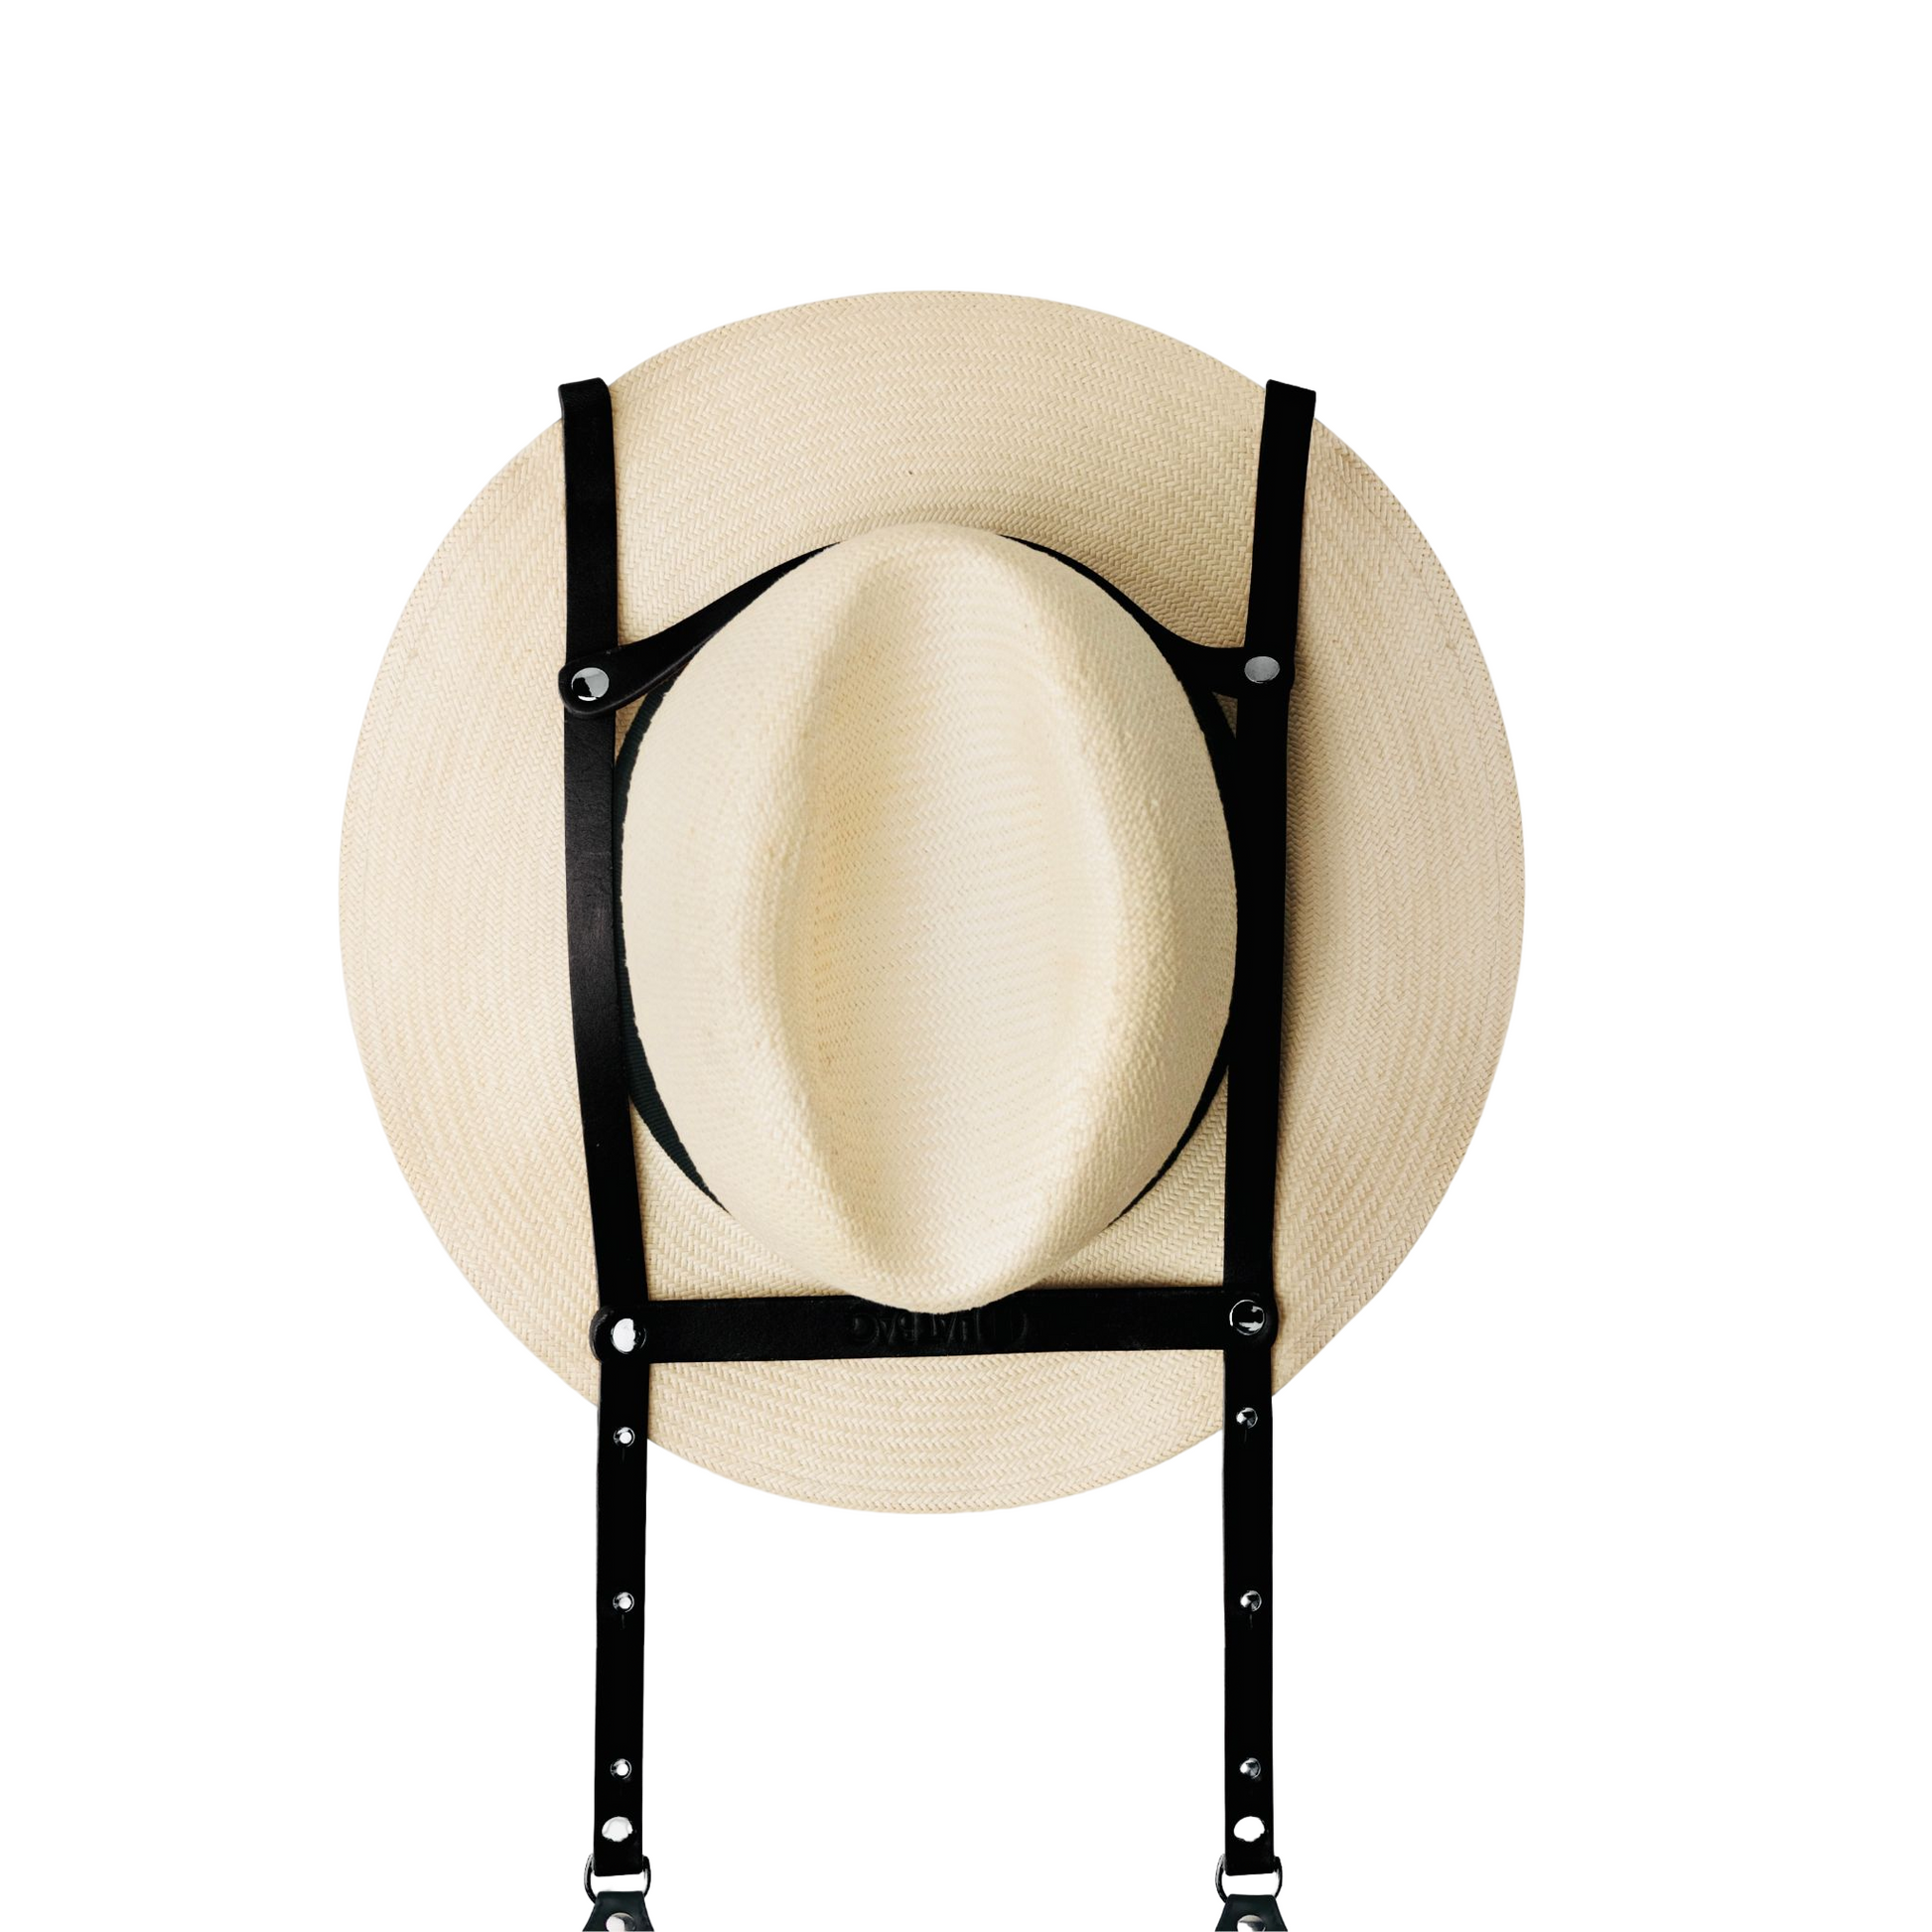 Hat Bag Hat Bag "Paris" in pelle nera e catene argento - hat bag paris